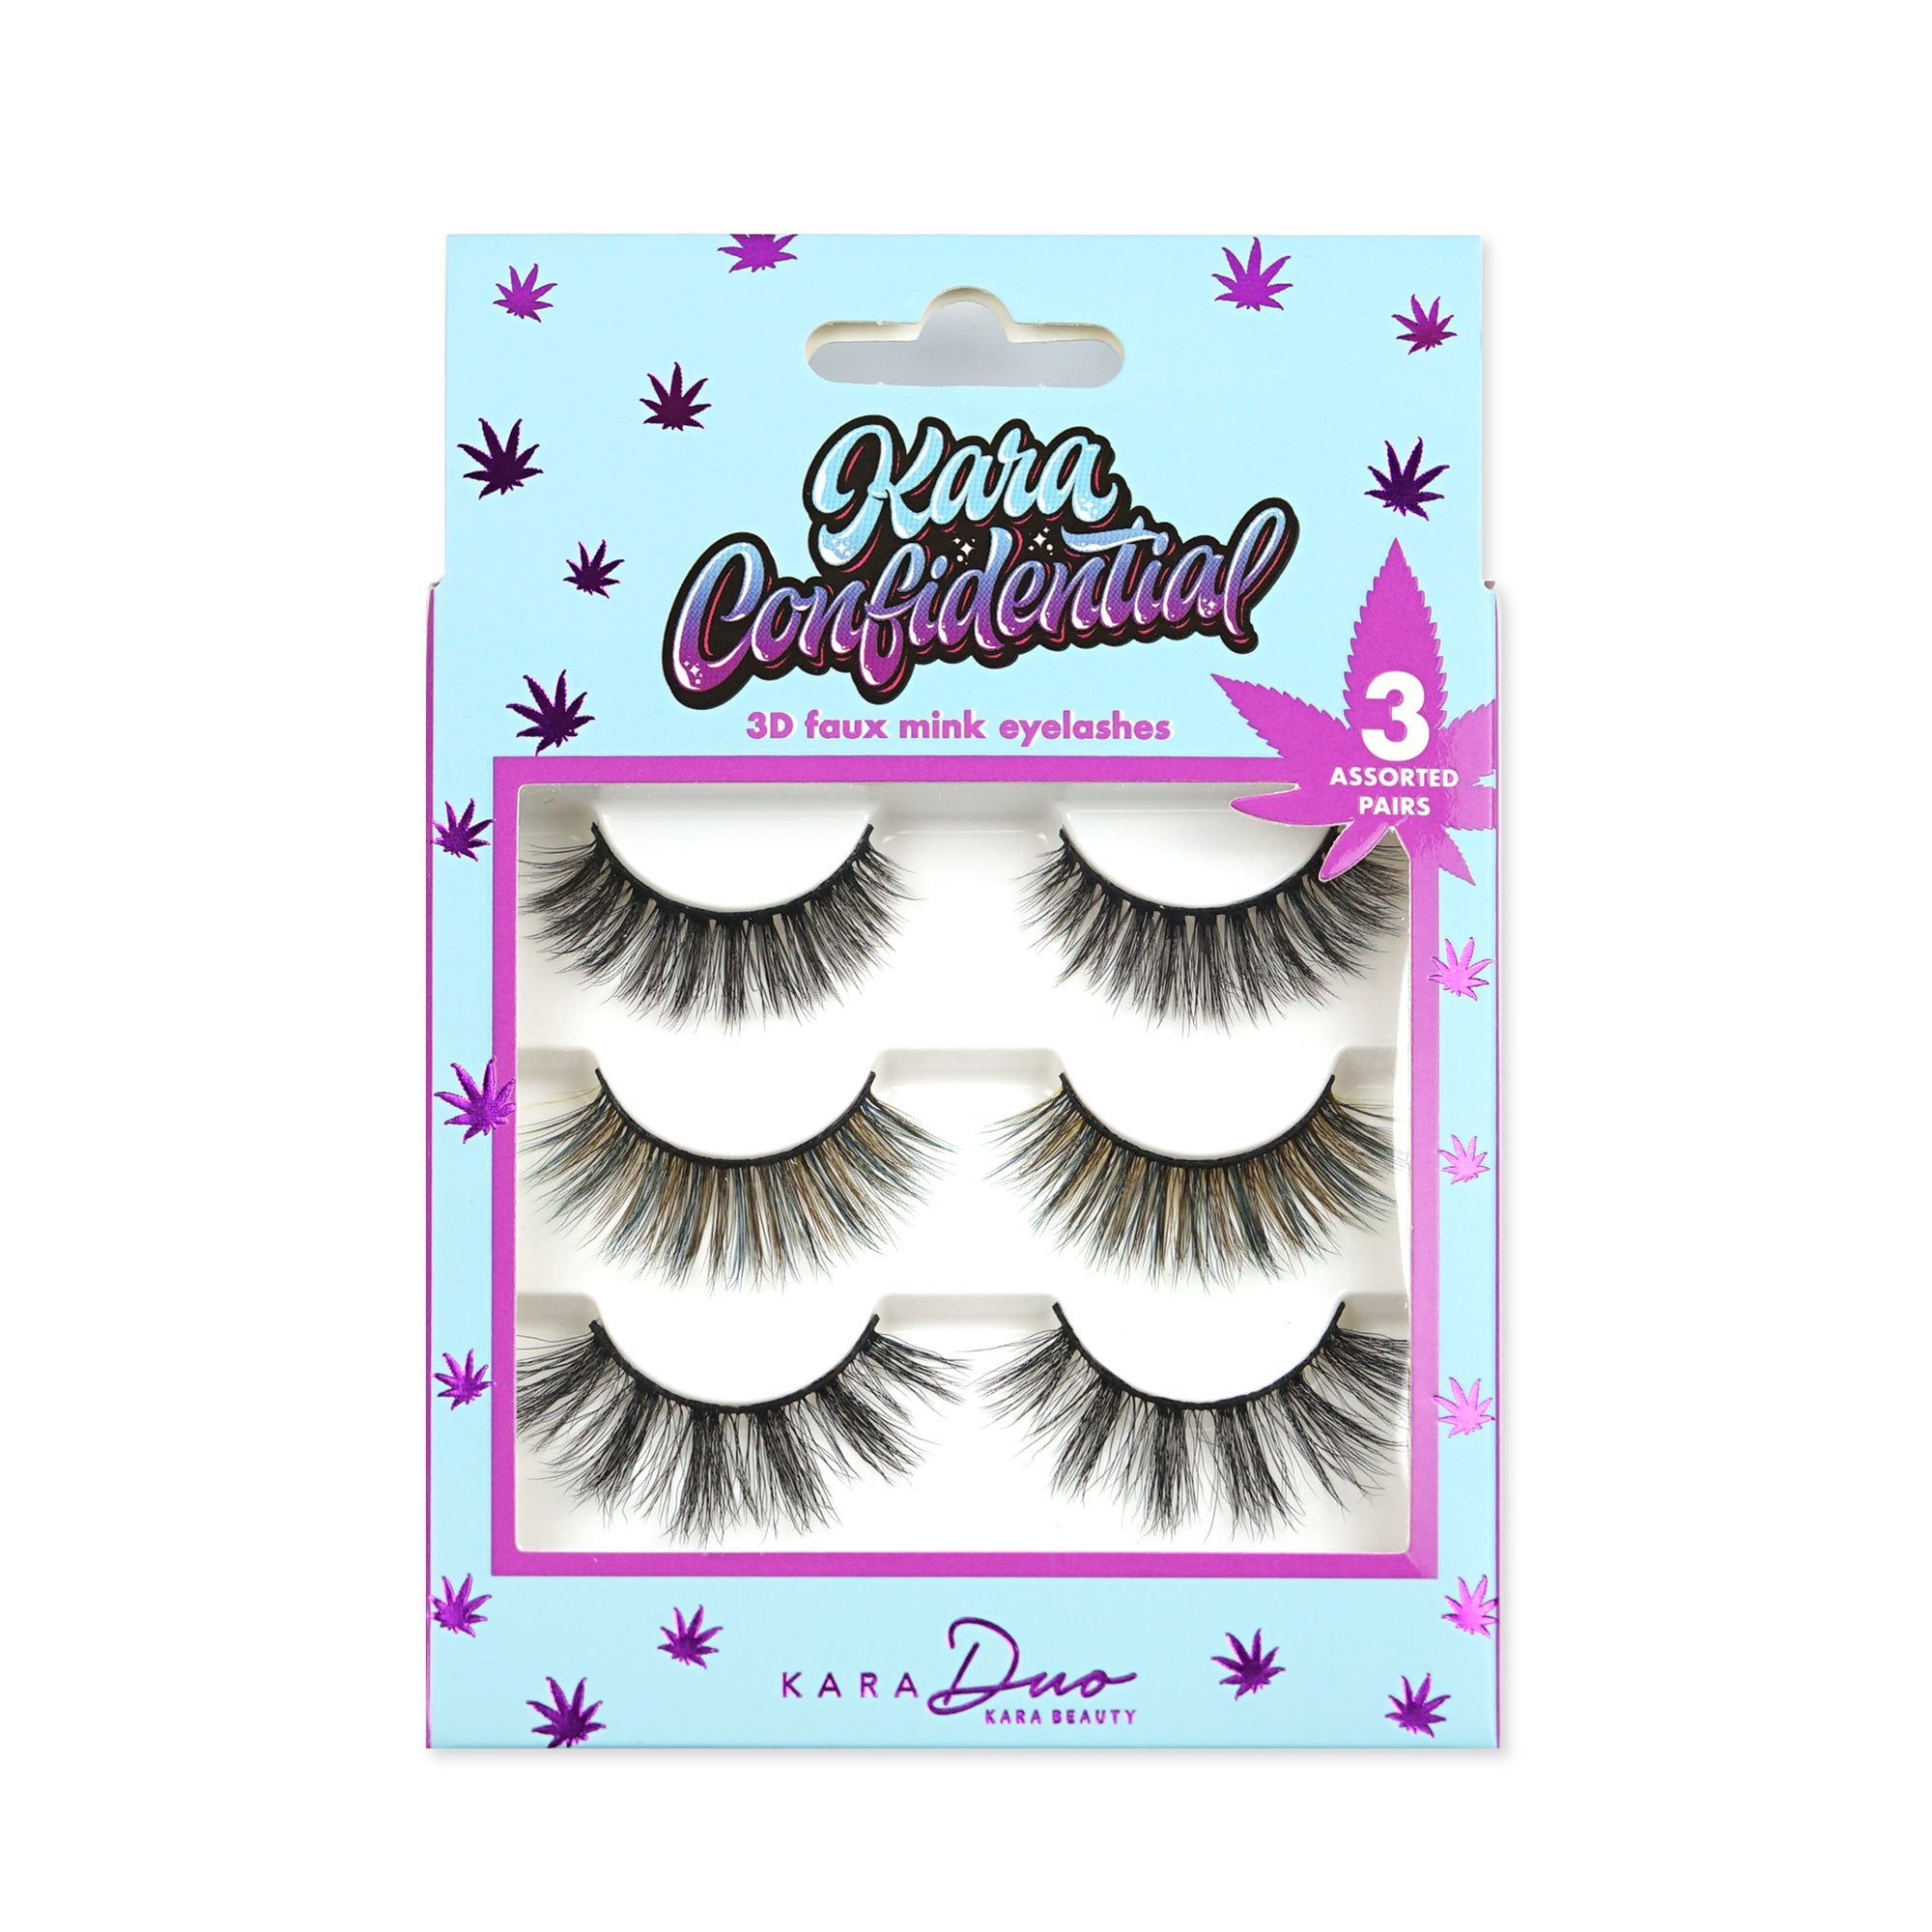 Kara Confidential 3D faux mink eyelashes multipack